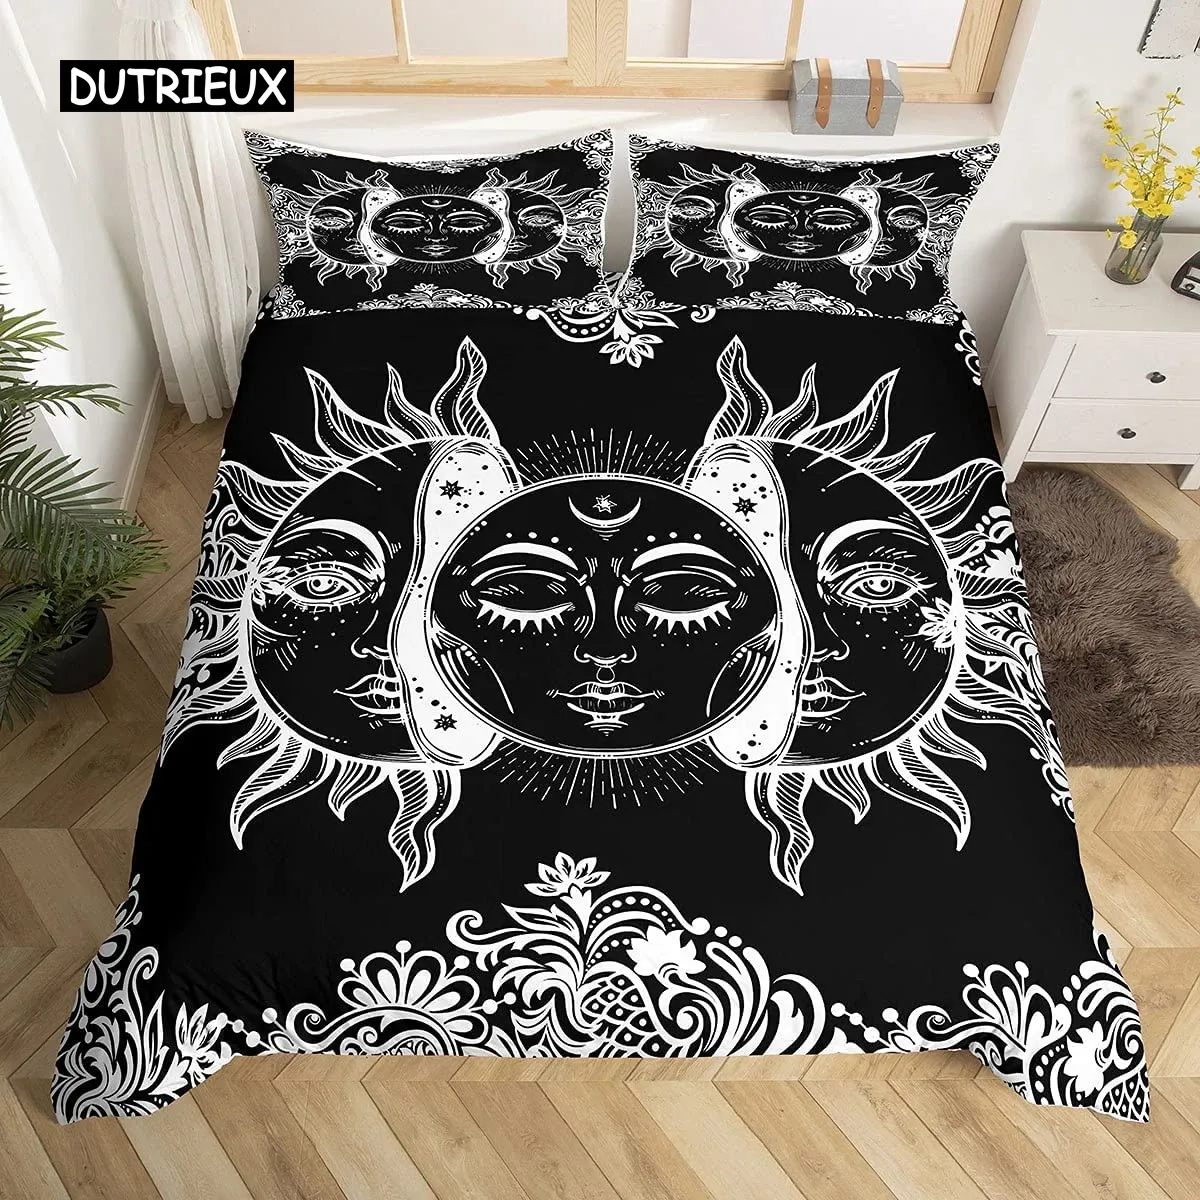 Conjunto de capa de edredom de mandala conjunto de sol e lua de capa de lua, laços de estilo exótico preto e branco Conjunto de cama de poliéster floral de poliéster floral